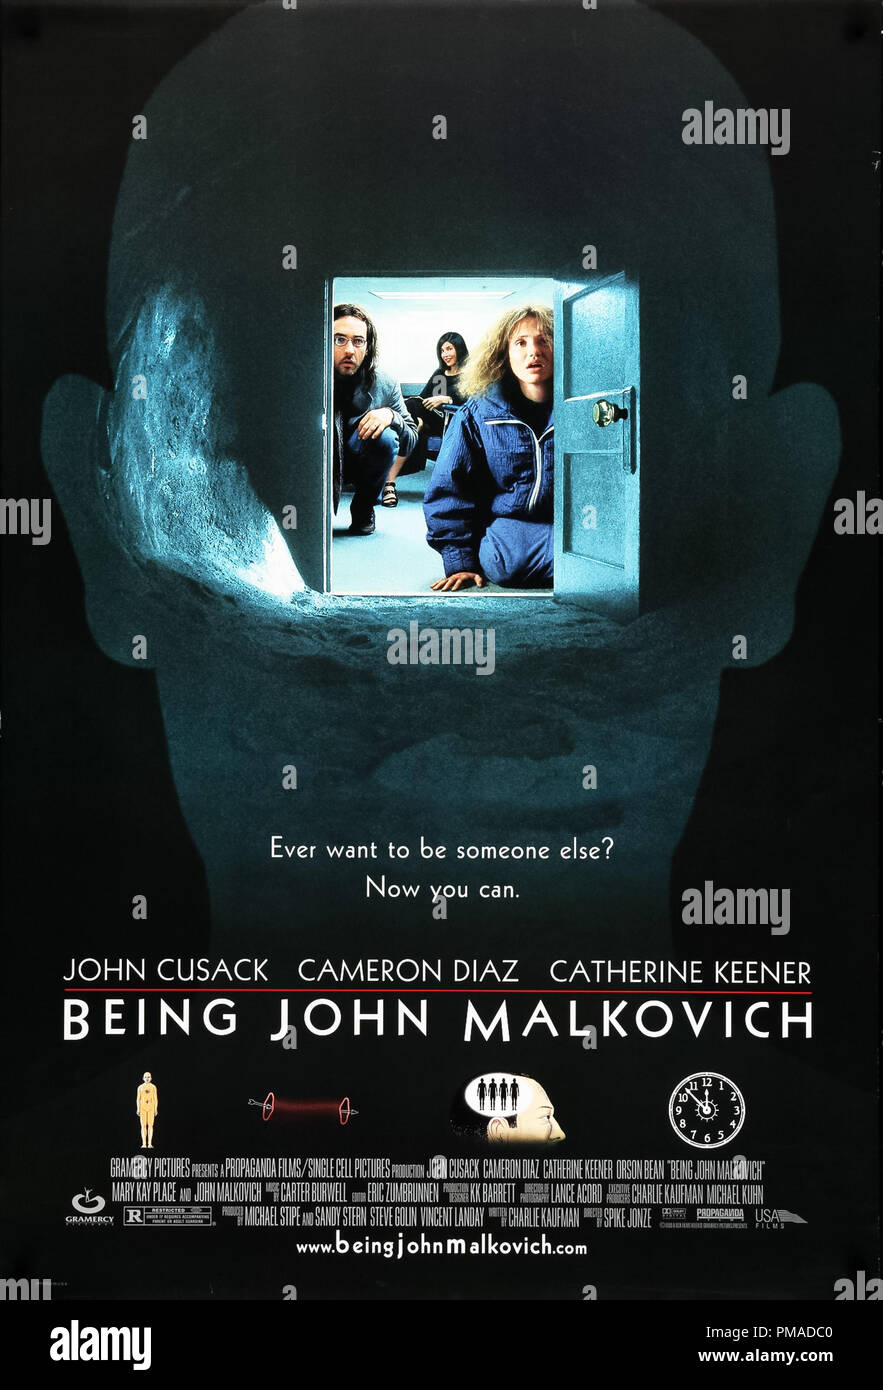 'Being John Malkovich' - US Poster 1999 USA Films  John Cusack, Cameron Diaz, Catherine Keener  File Reference # 32509 049THA Stock Photo